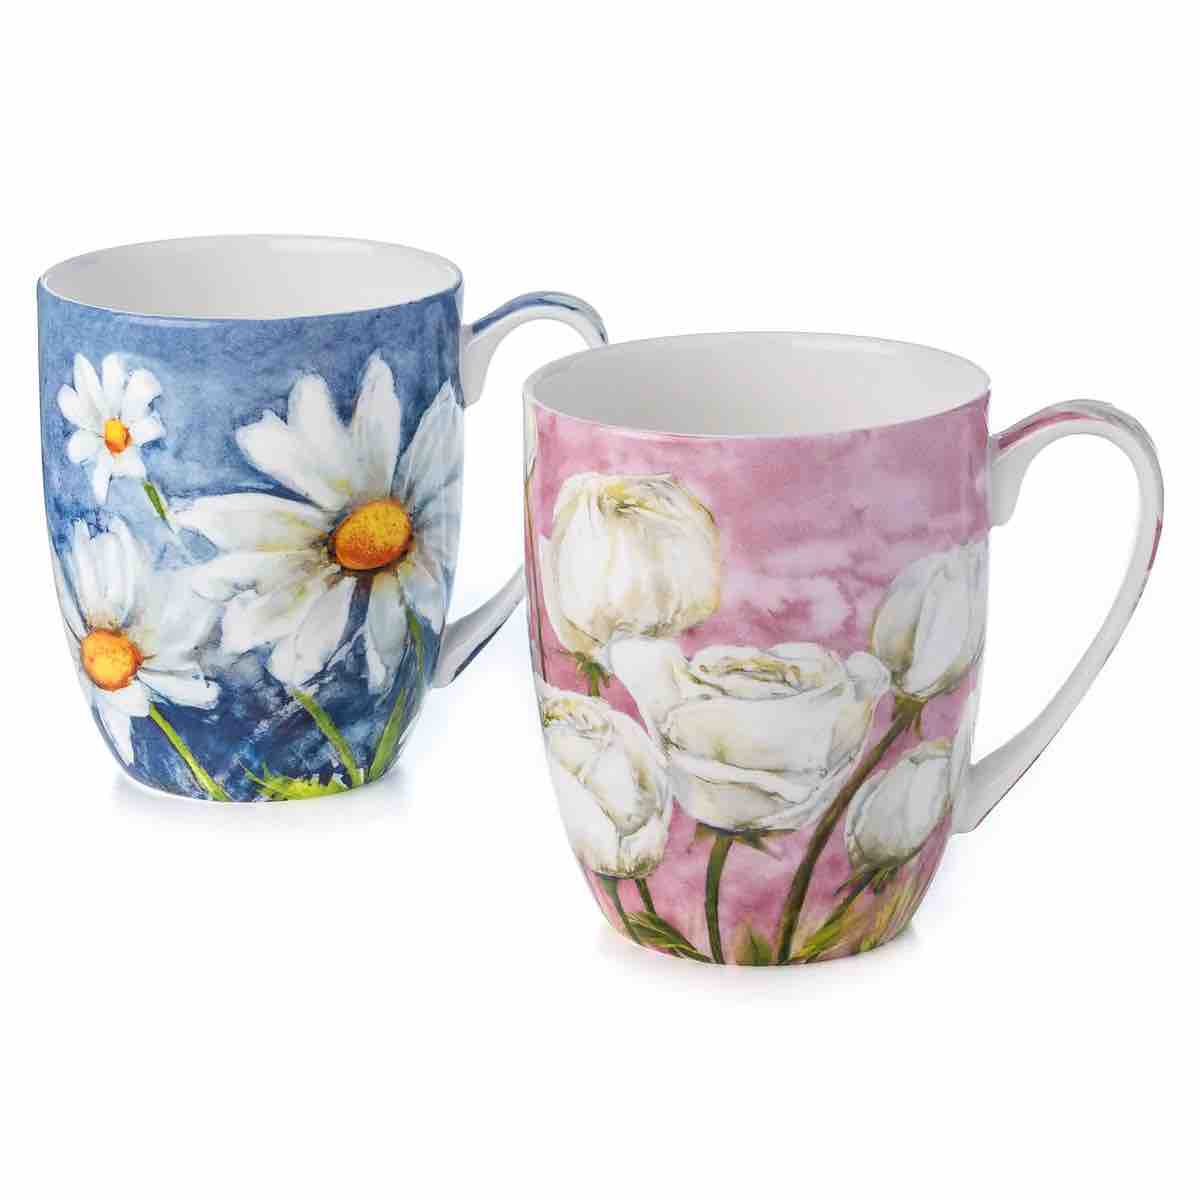 'Morning Flowers' Mug Pair